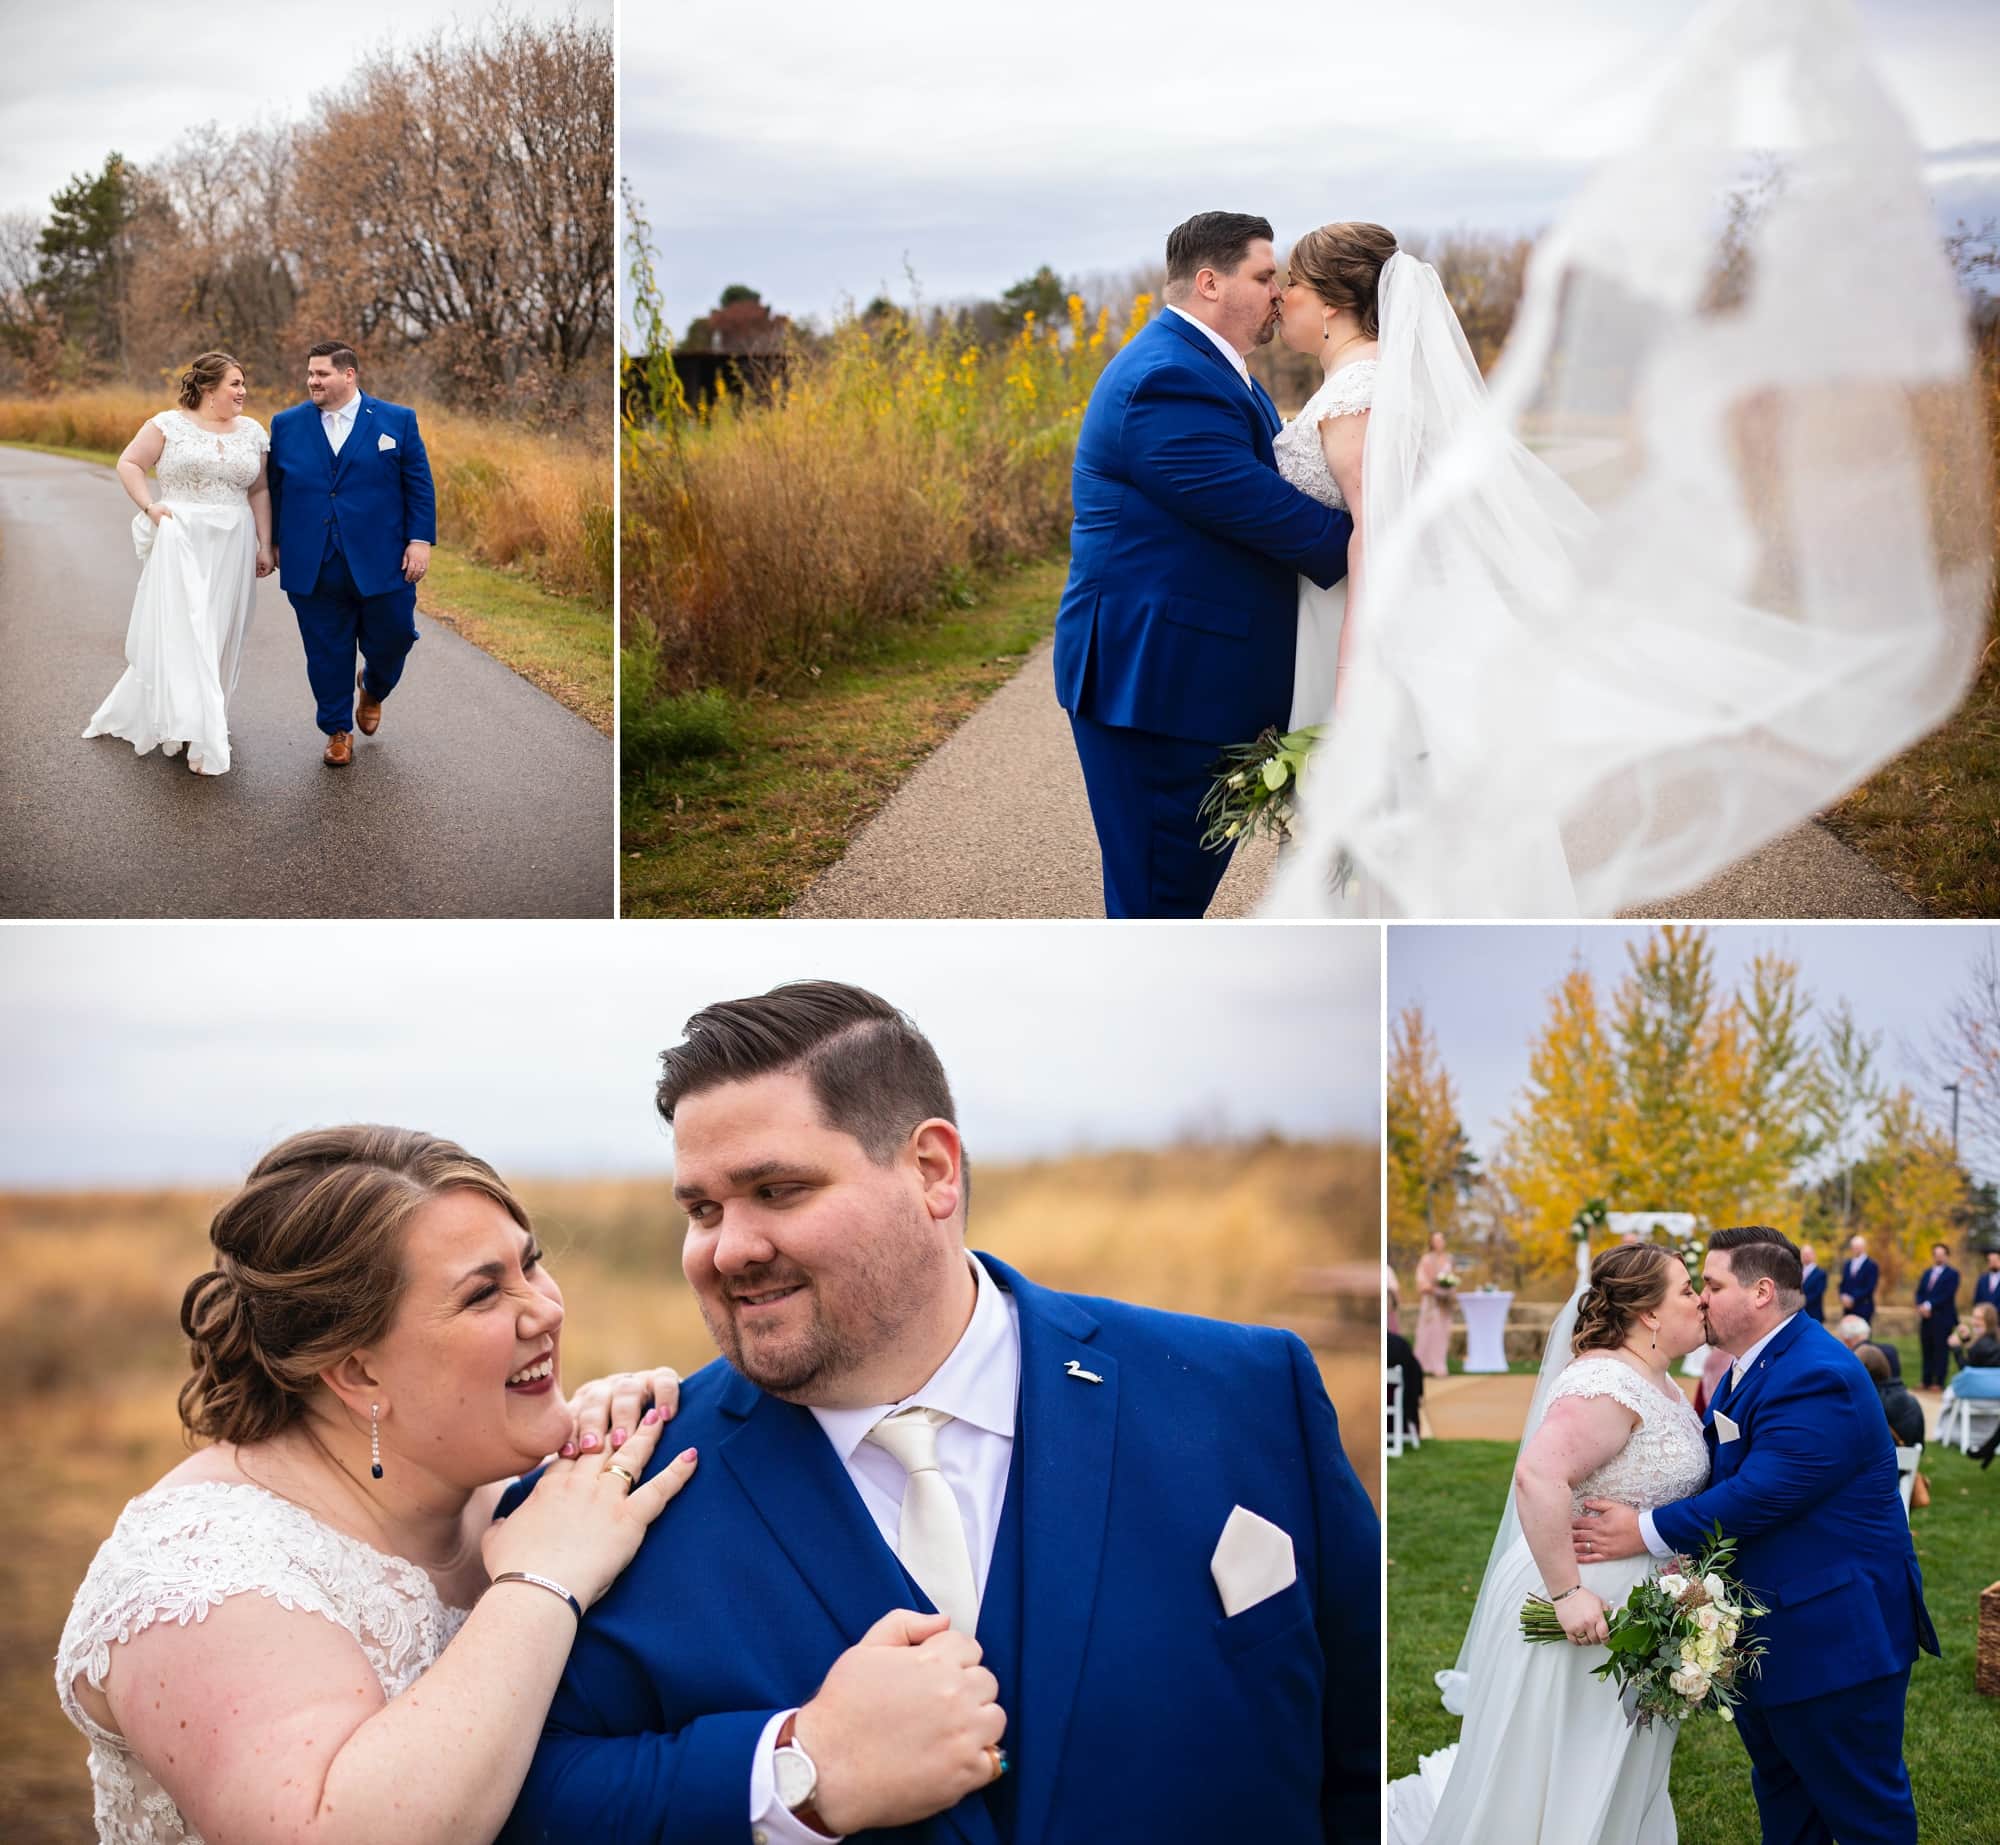 Whitetail woods wedding ceremony for Erin and Joe in Farmington, Minnesota. 